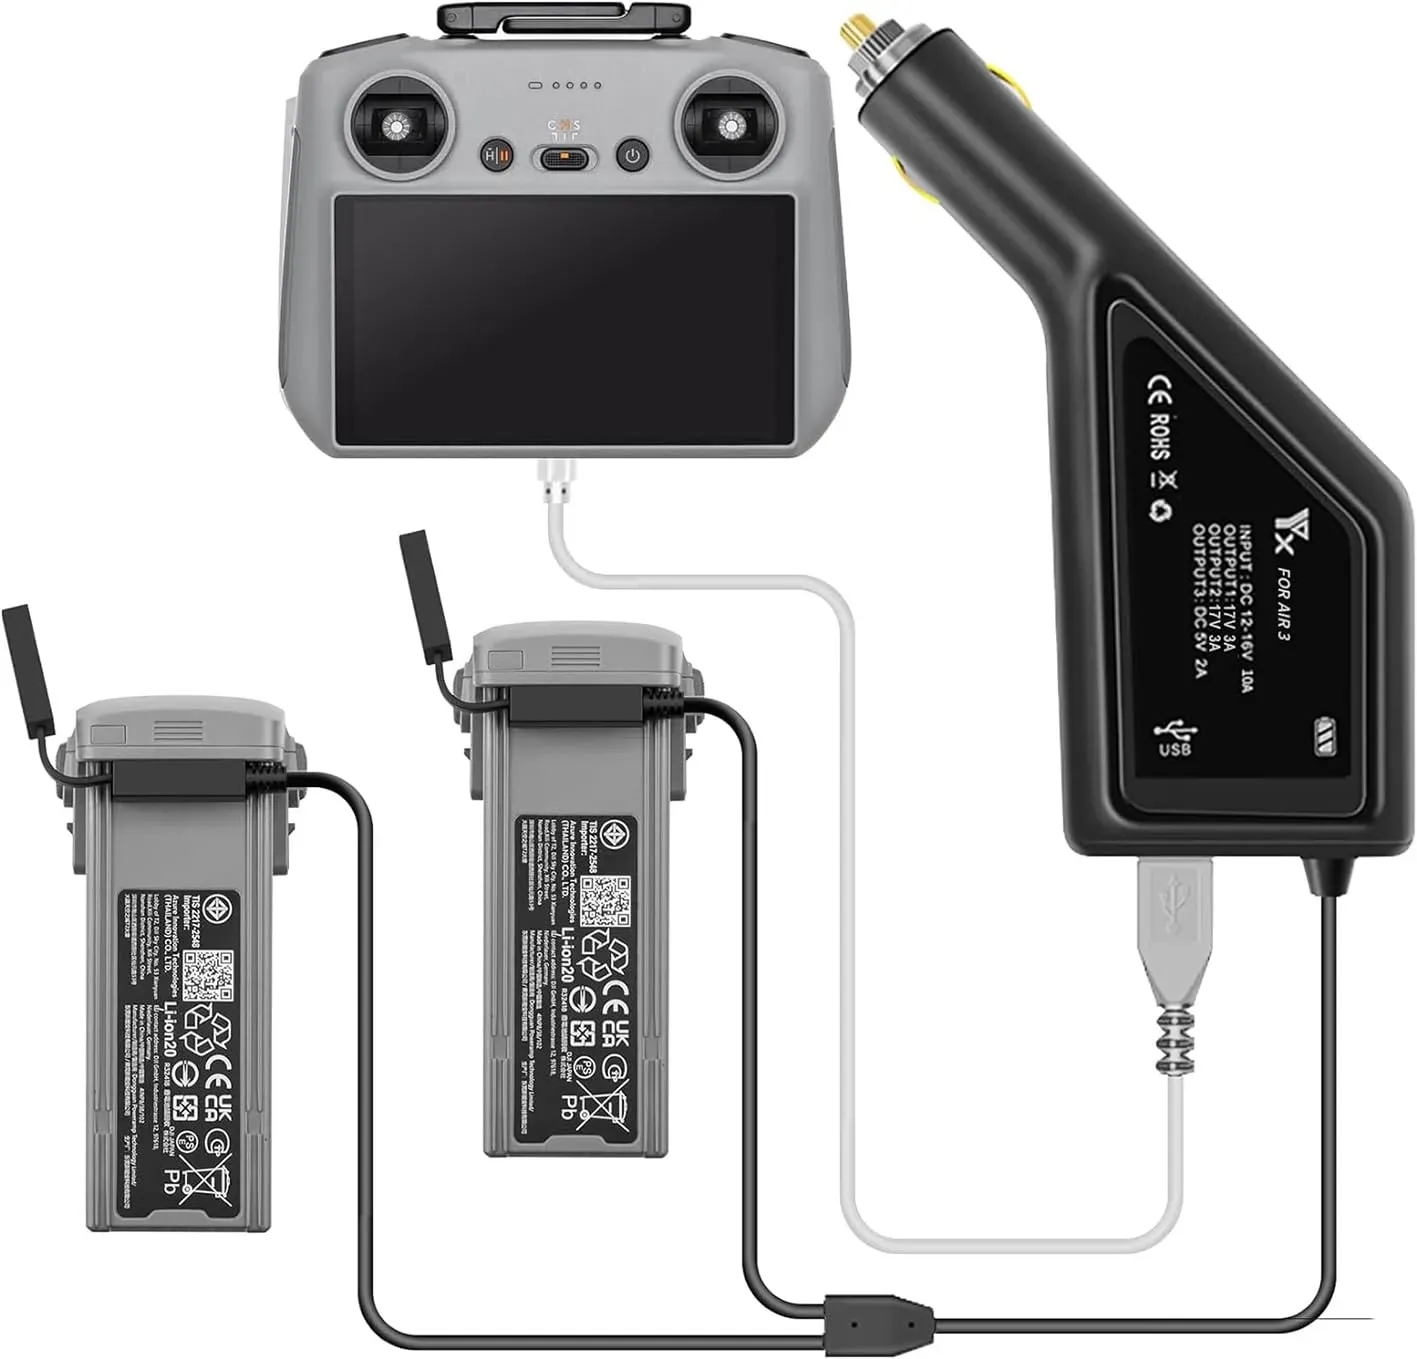 Yangers Autoladegerät für DJI Air 3 Drohne (Nicht für Mavic Air 2/Air), 3-in-1 Autoladegerät-Adapter für Air 3 Akku + Fernbedienung/Smartphone/iPad